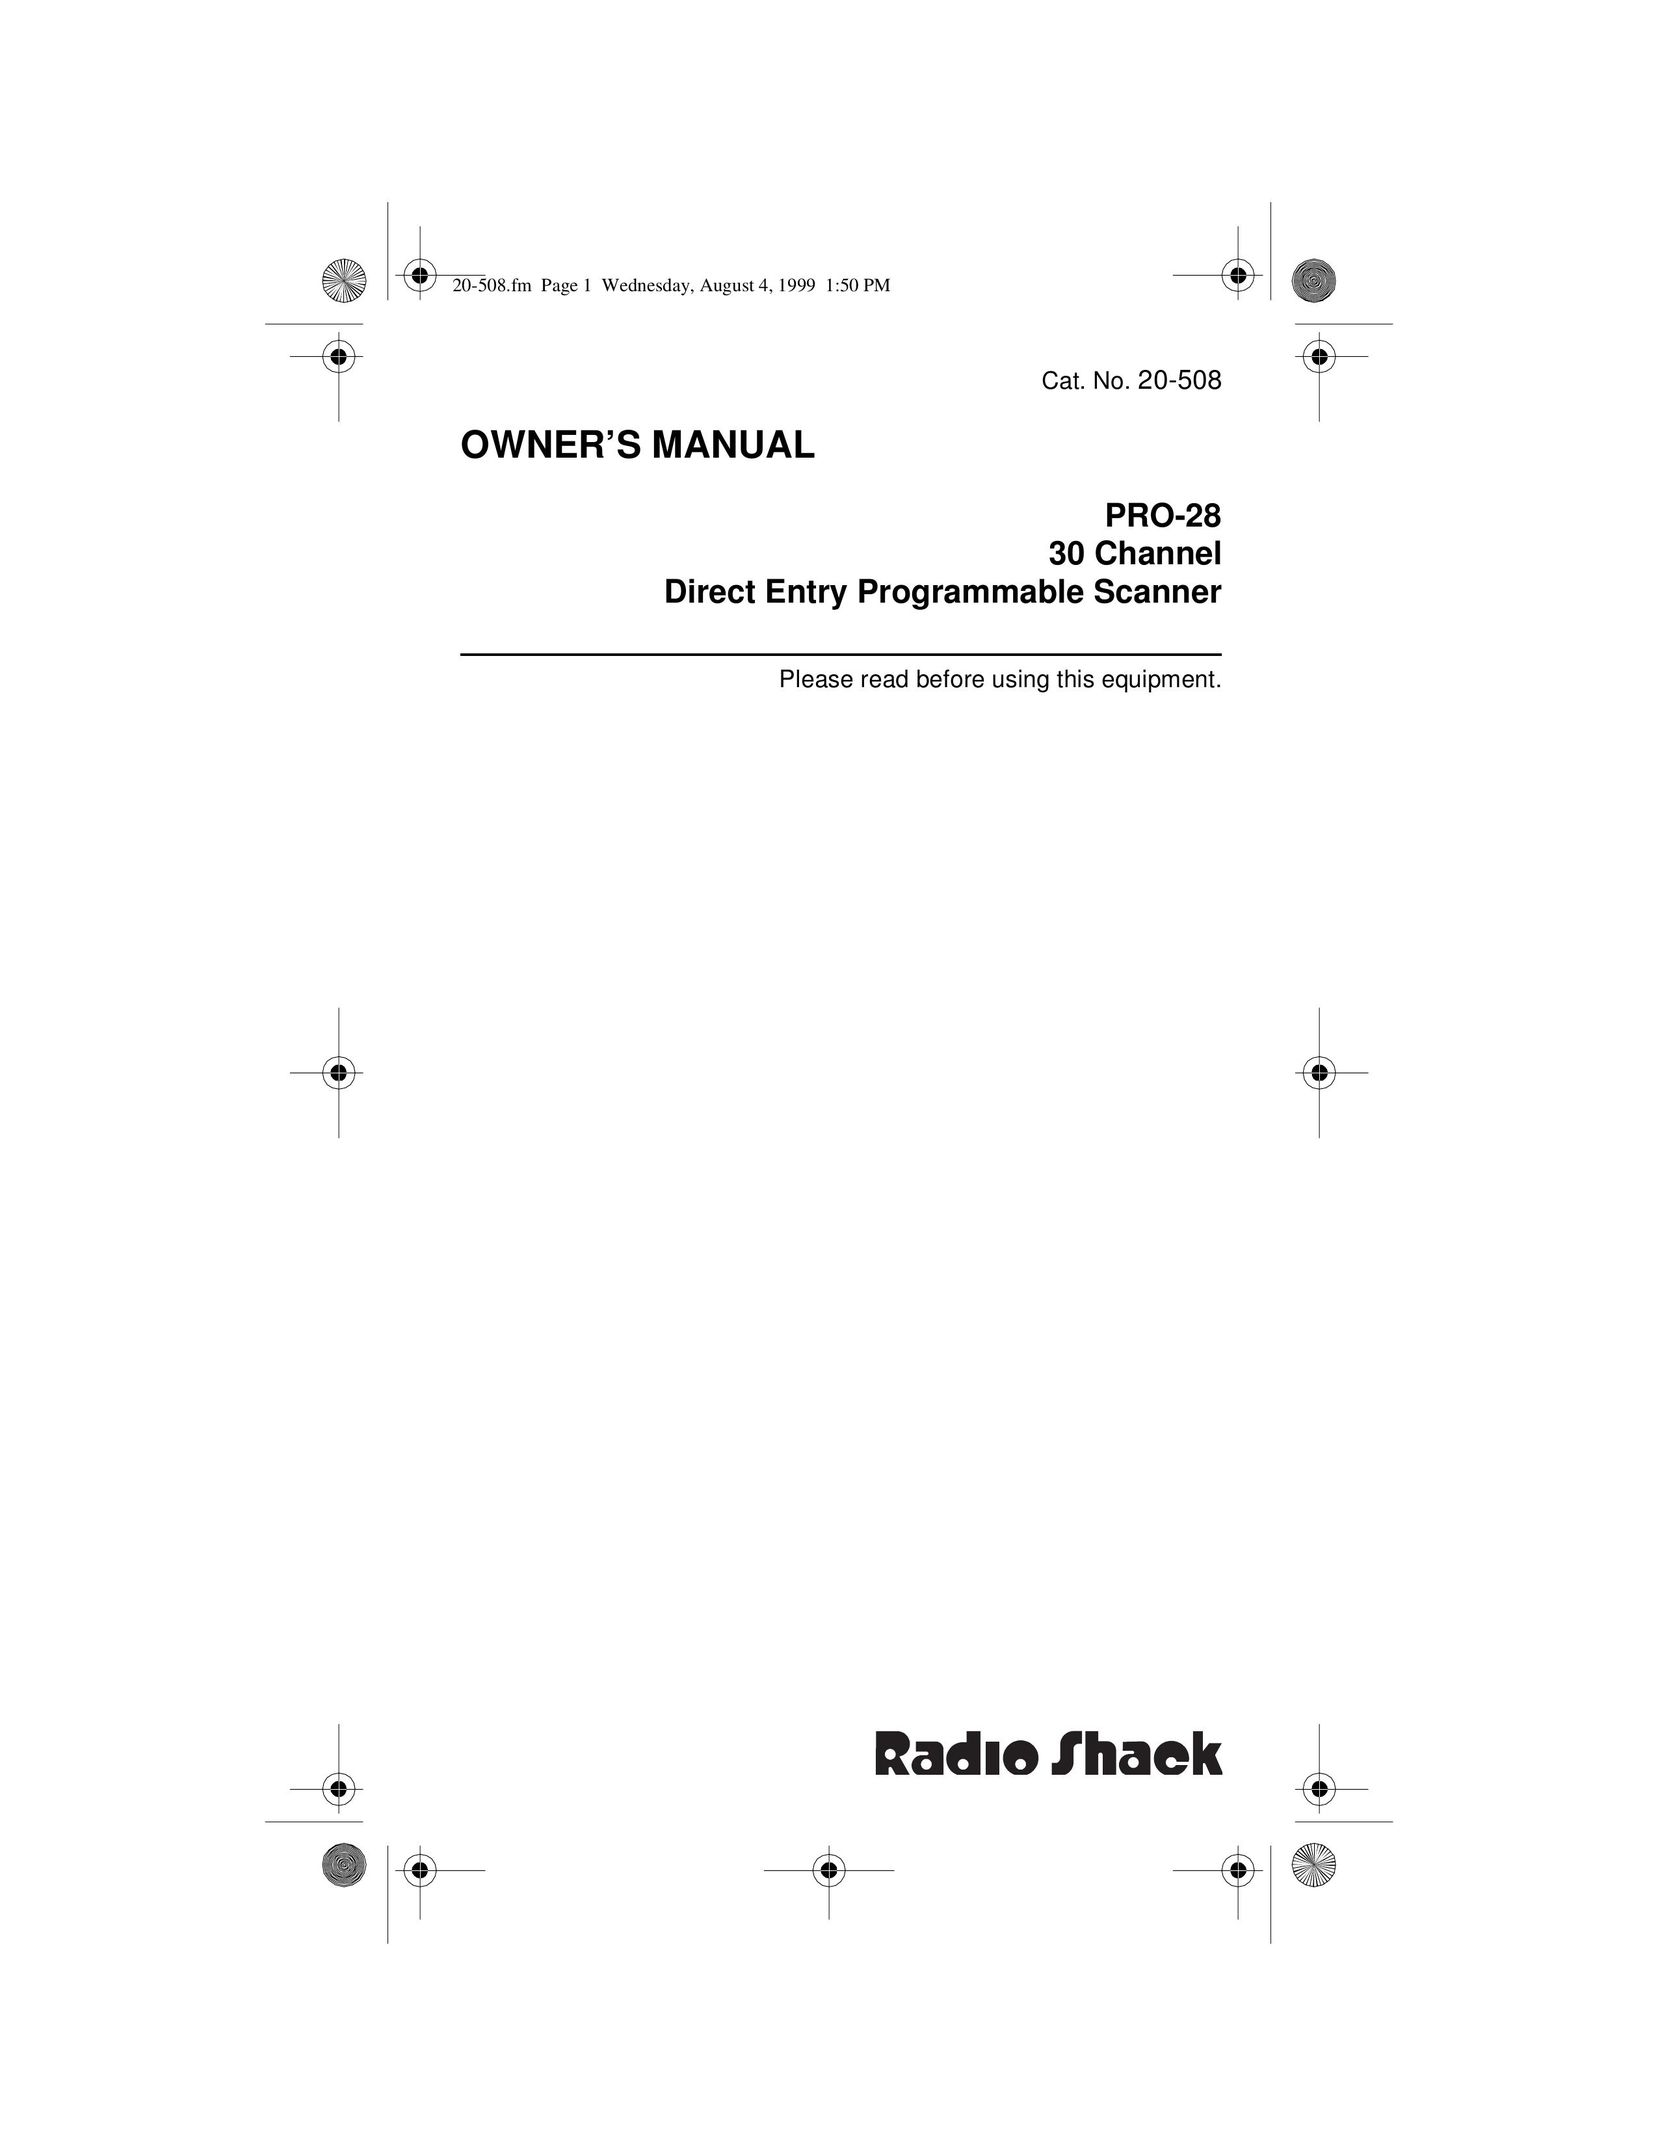 Radio Shack PRO-28 Scanner User Manual